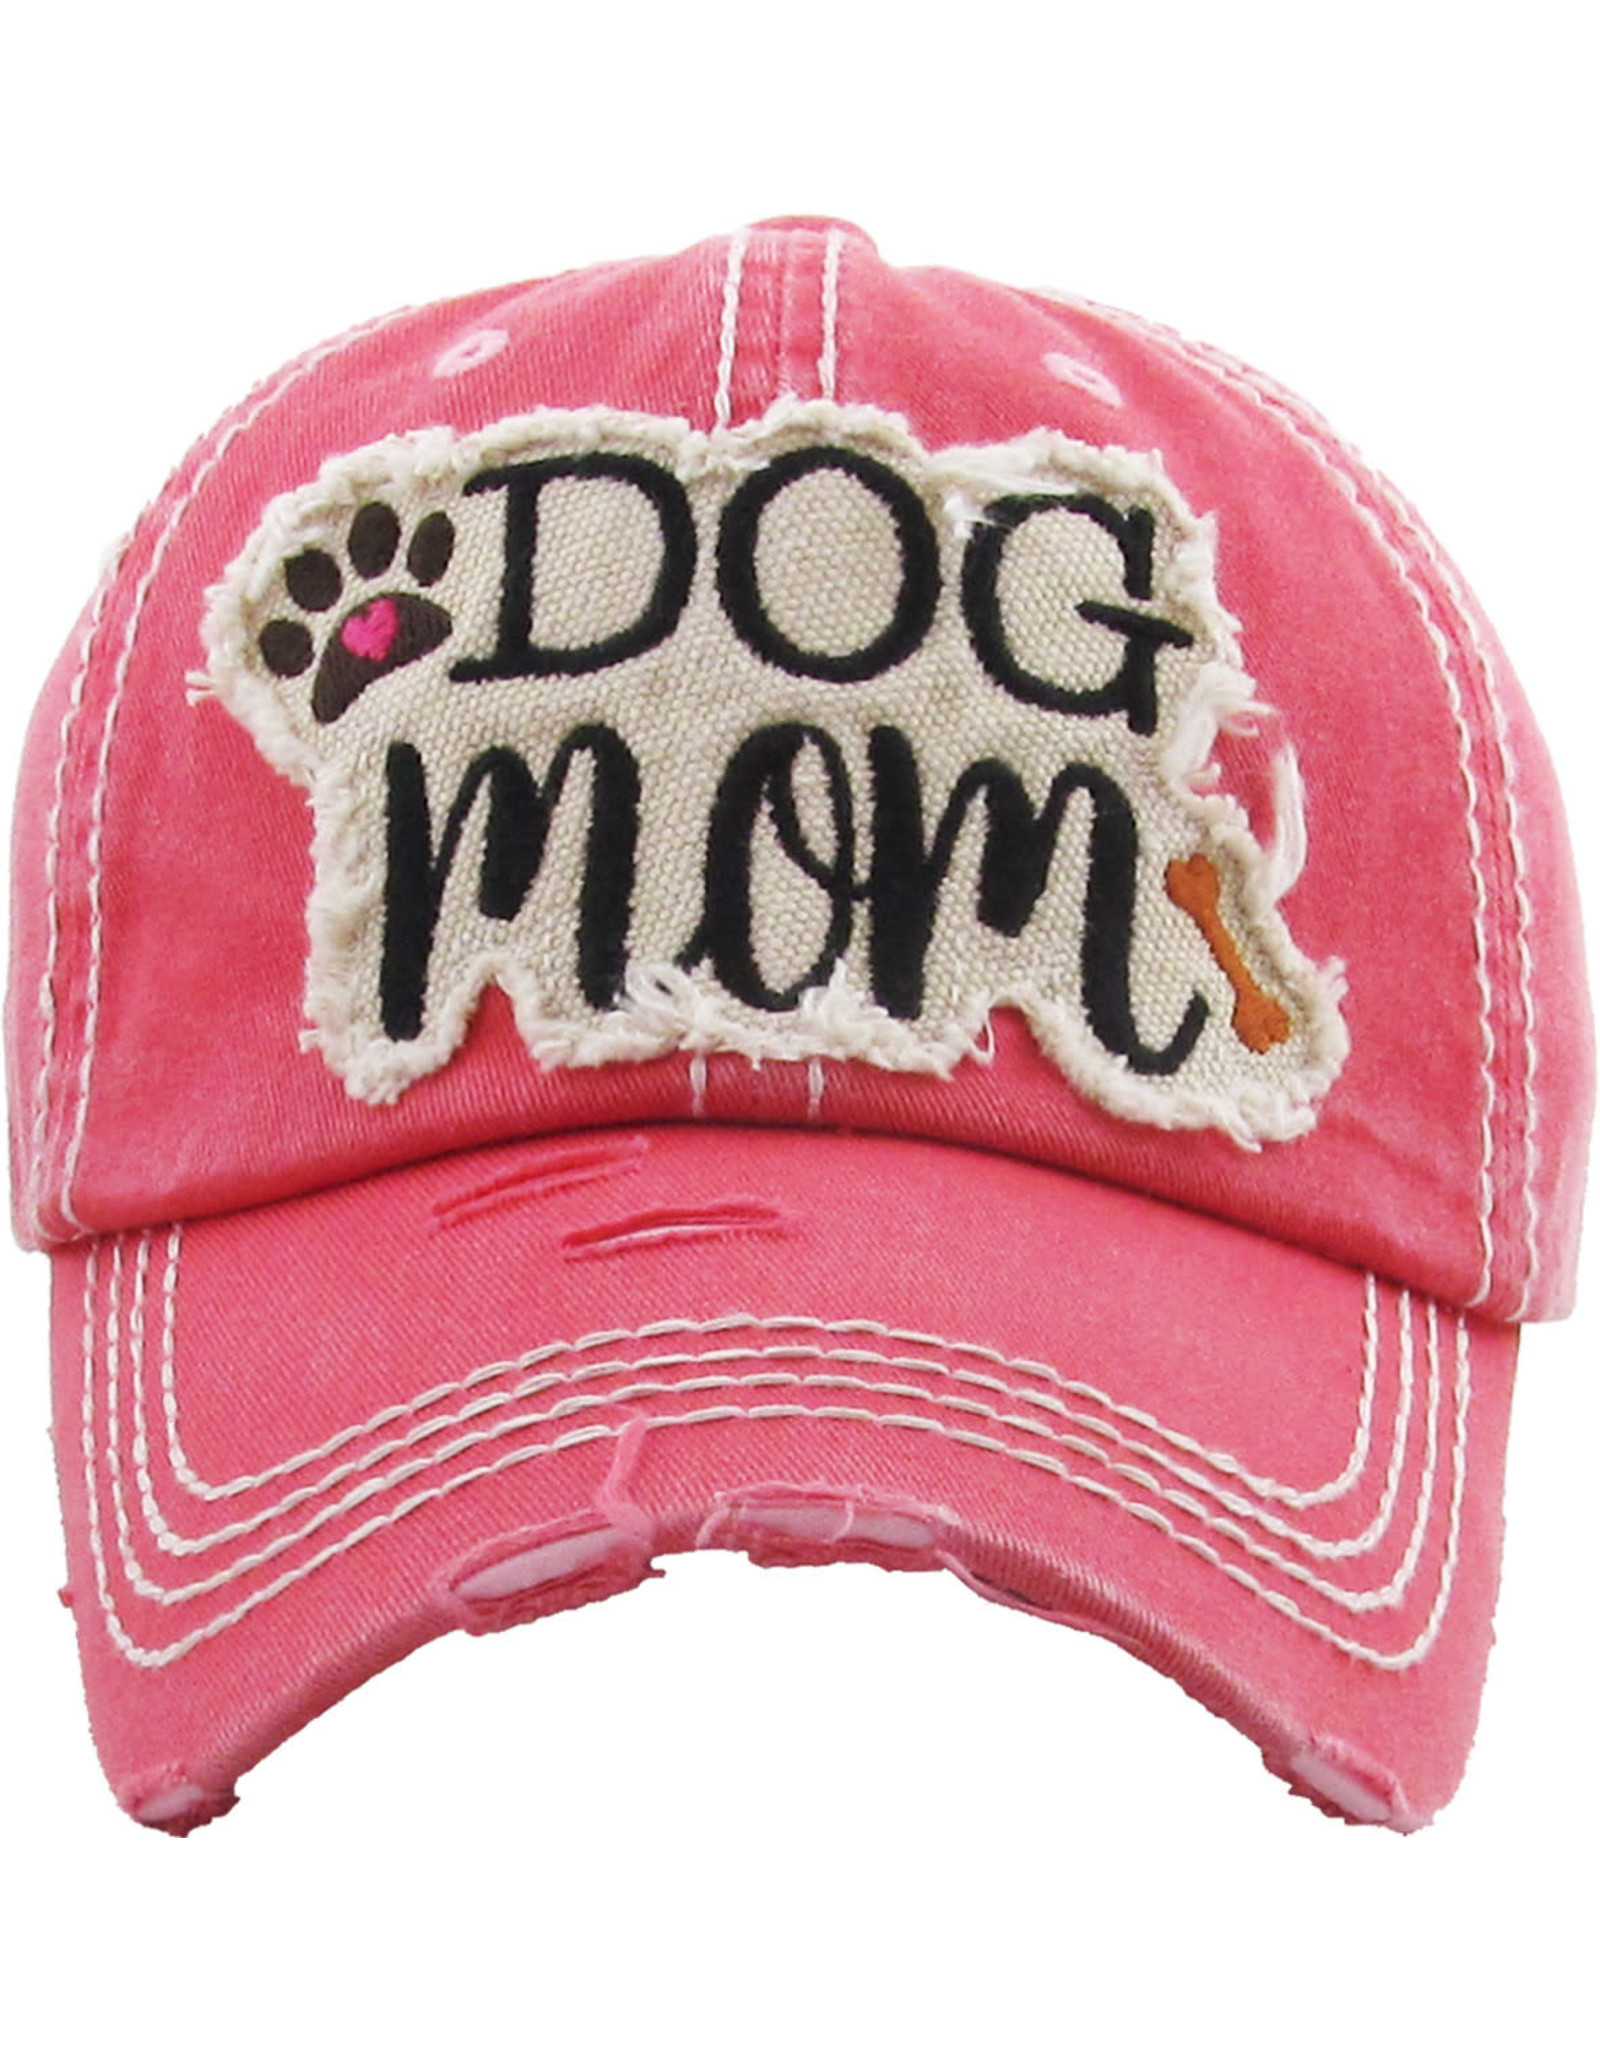 KB Ethos Hot Pink Dog Mom Cap